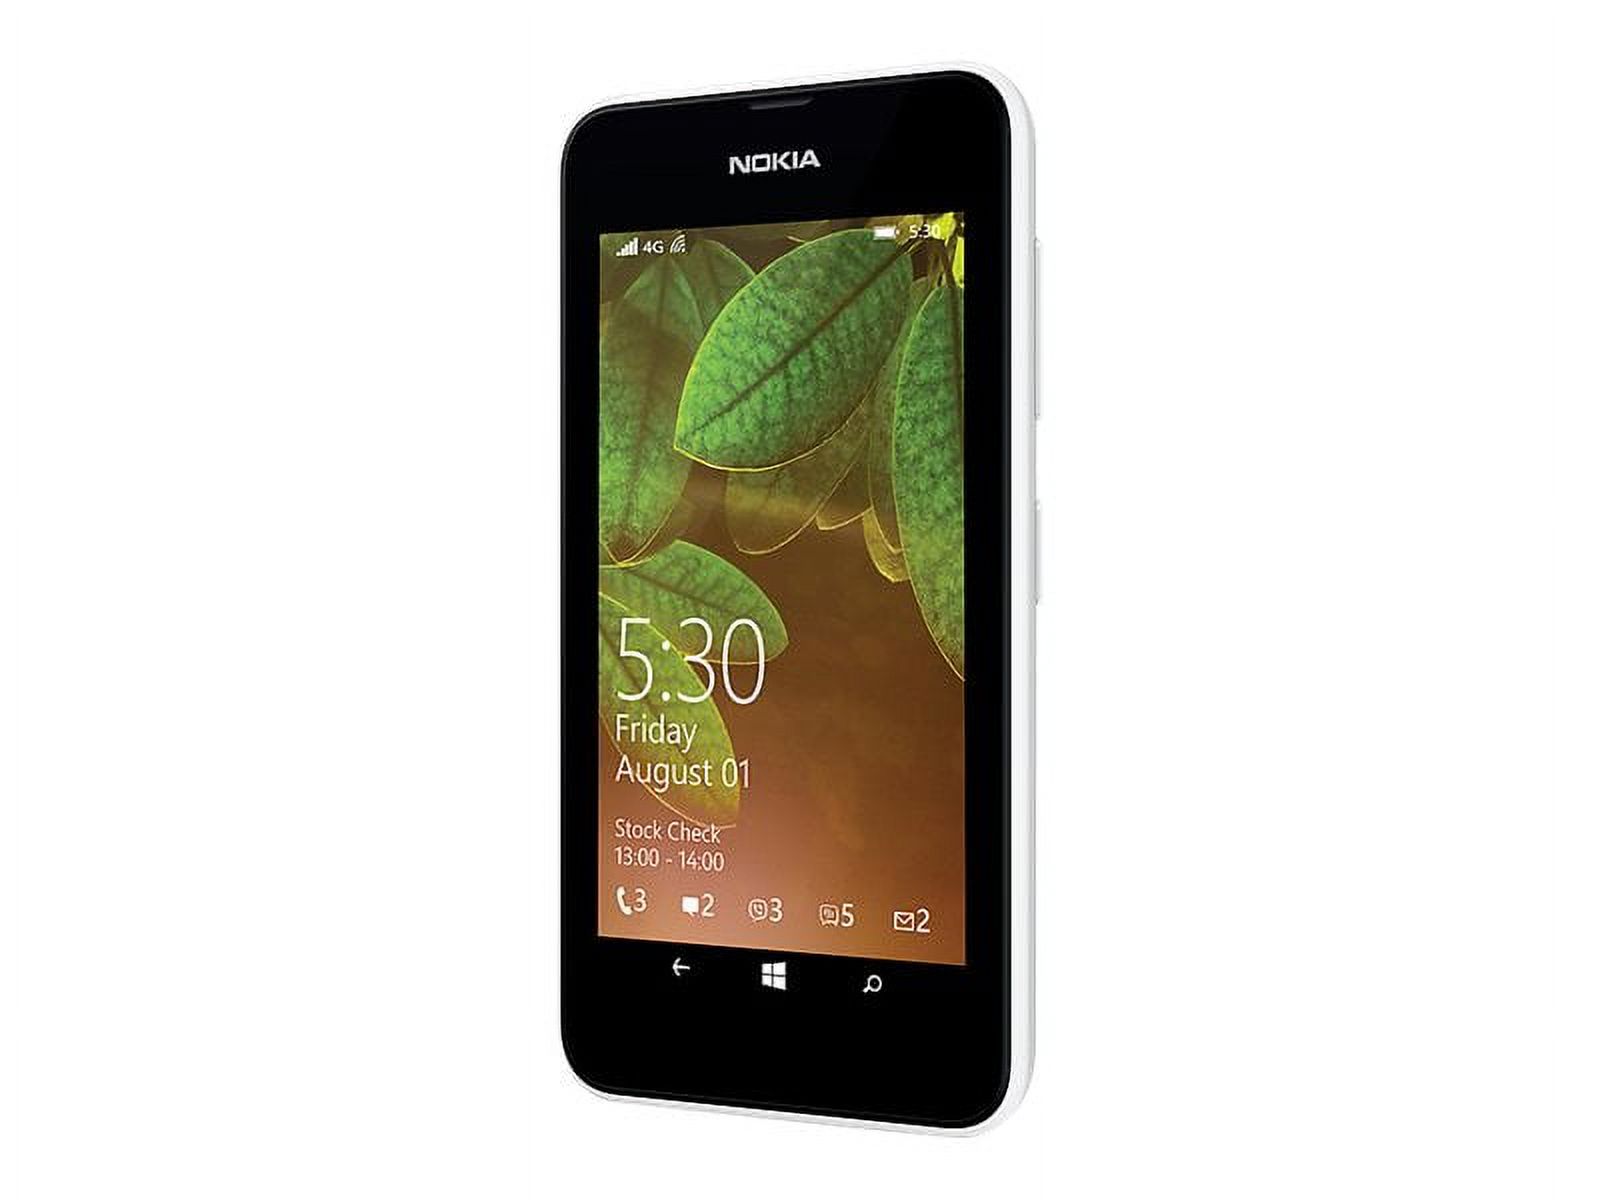 Nokia Lumia 530 - 3G smartphone - RAM 512 MB / Internal Memory 4 GB - microSD slot - LCD display - 4" - 480 x 854 pixels - rear camera 5 MP - T-Mobile - white - image 1 of 4